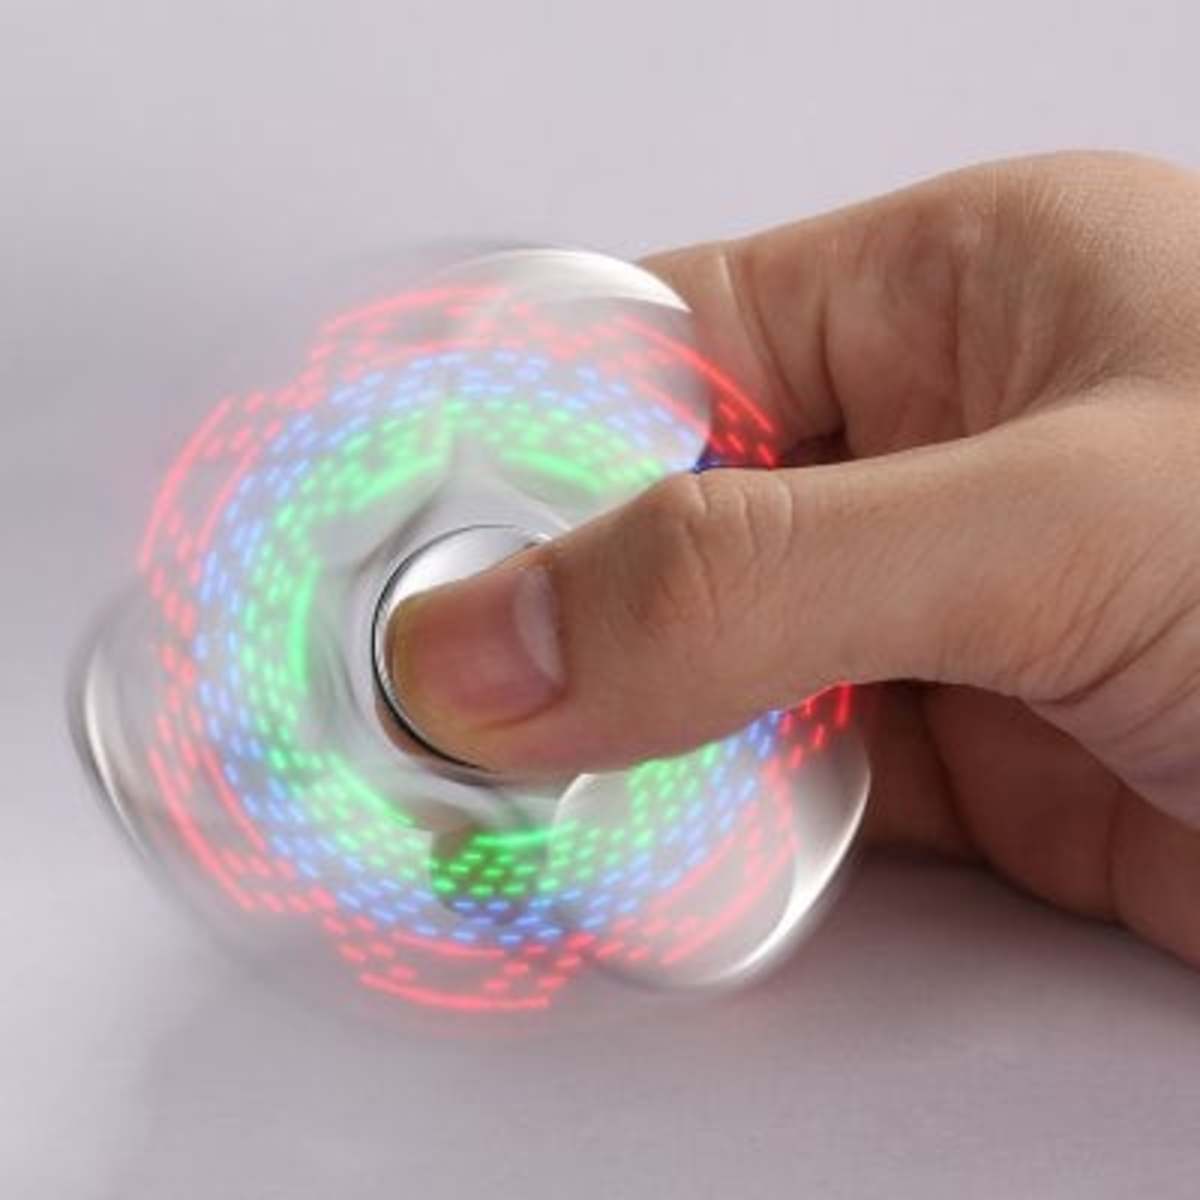 Electroplated Tri-bar Fidget Spinner with 18 Patterns LED Light